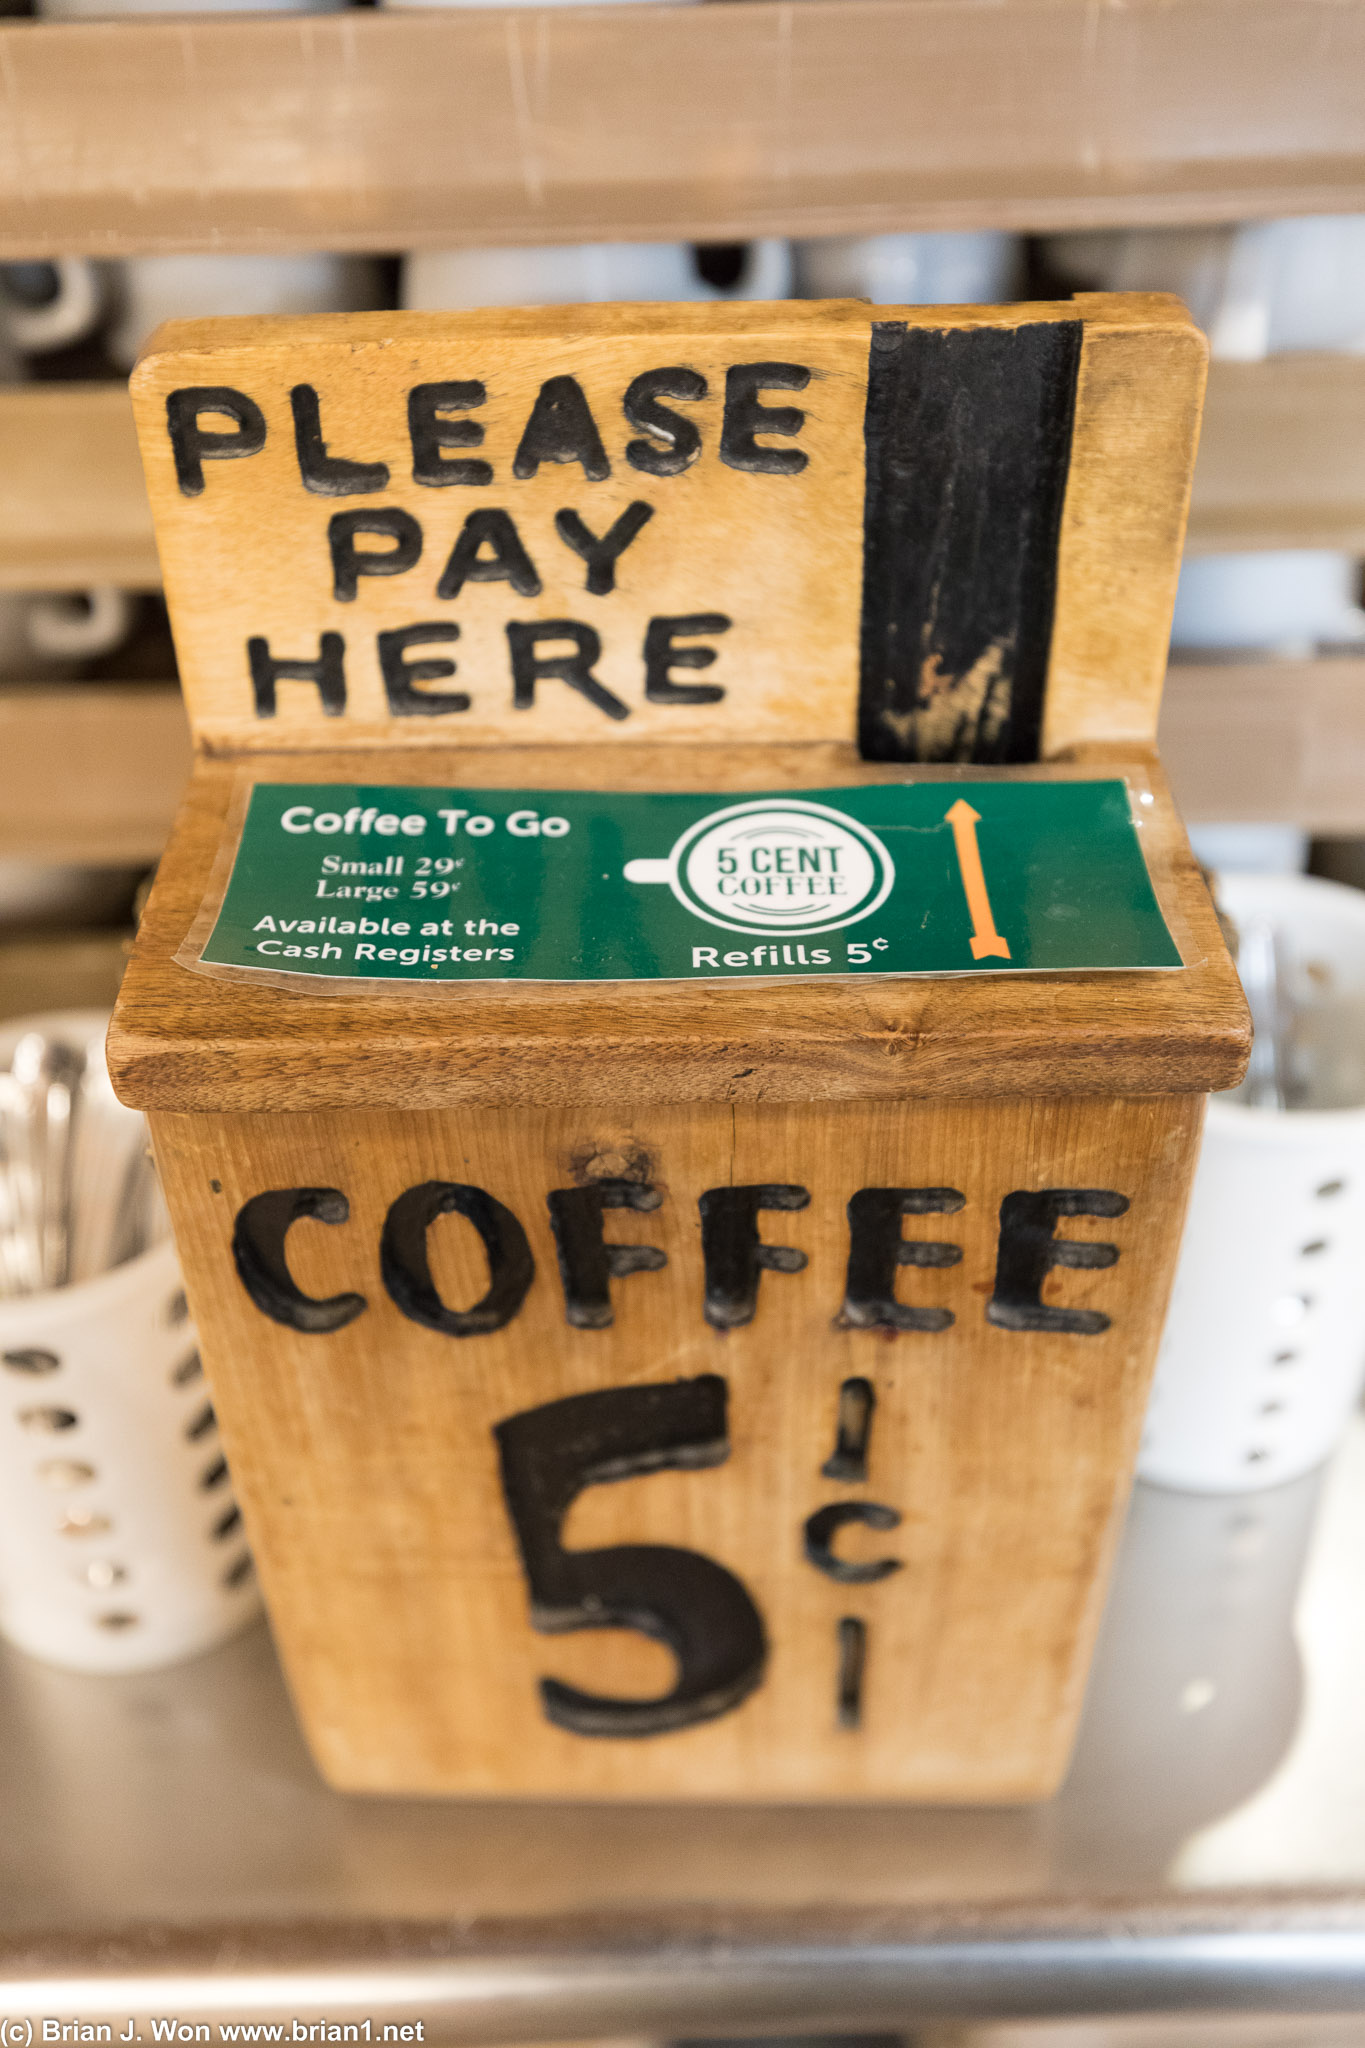 Coffee refills are still $0.05 at Wall Drug.